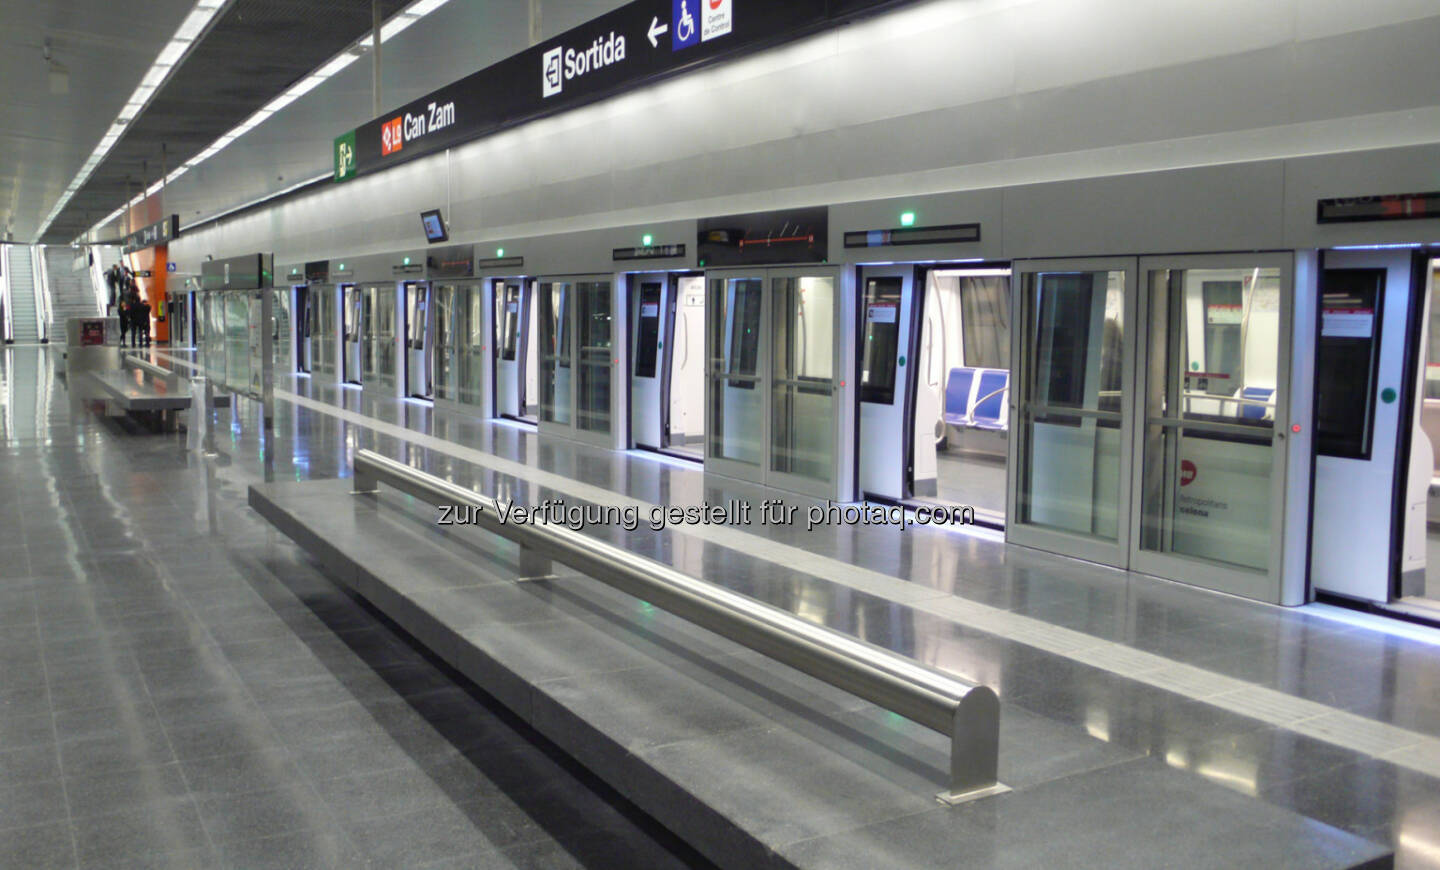 U-Bahnlinie 9 in Barcelona : Längste fahrerlose U-Bahn Europas in Barcelona in Betrieb : © Siemens AG